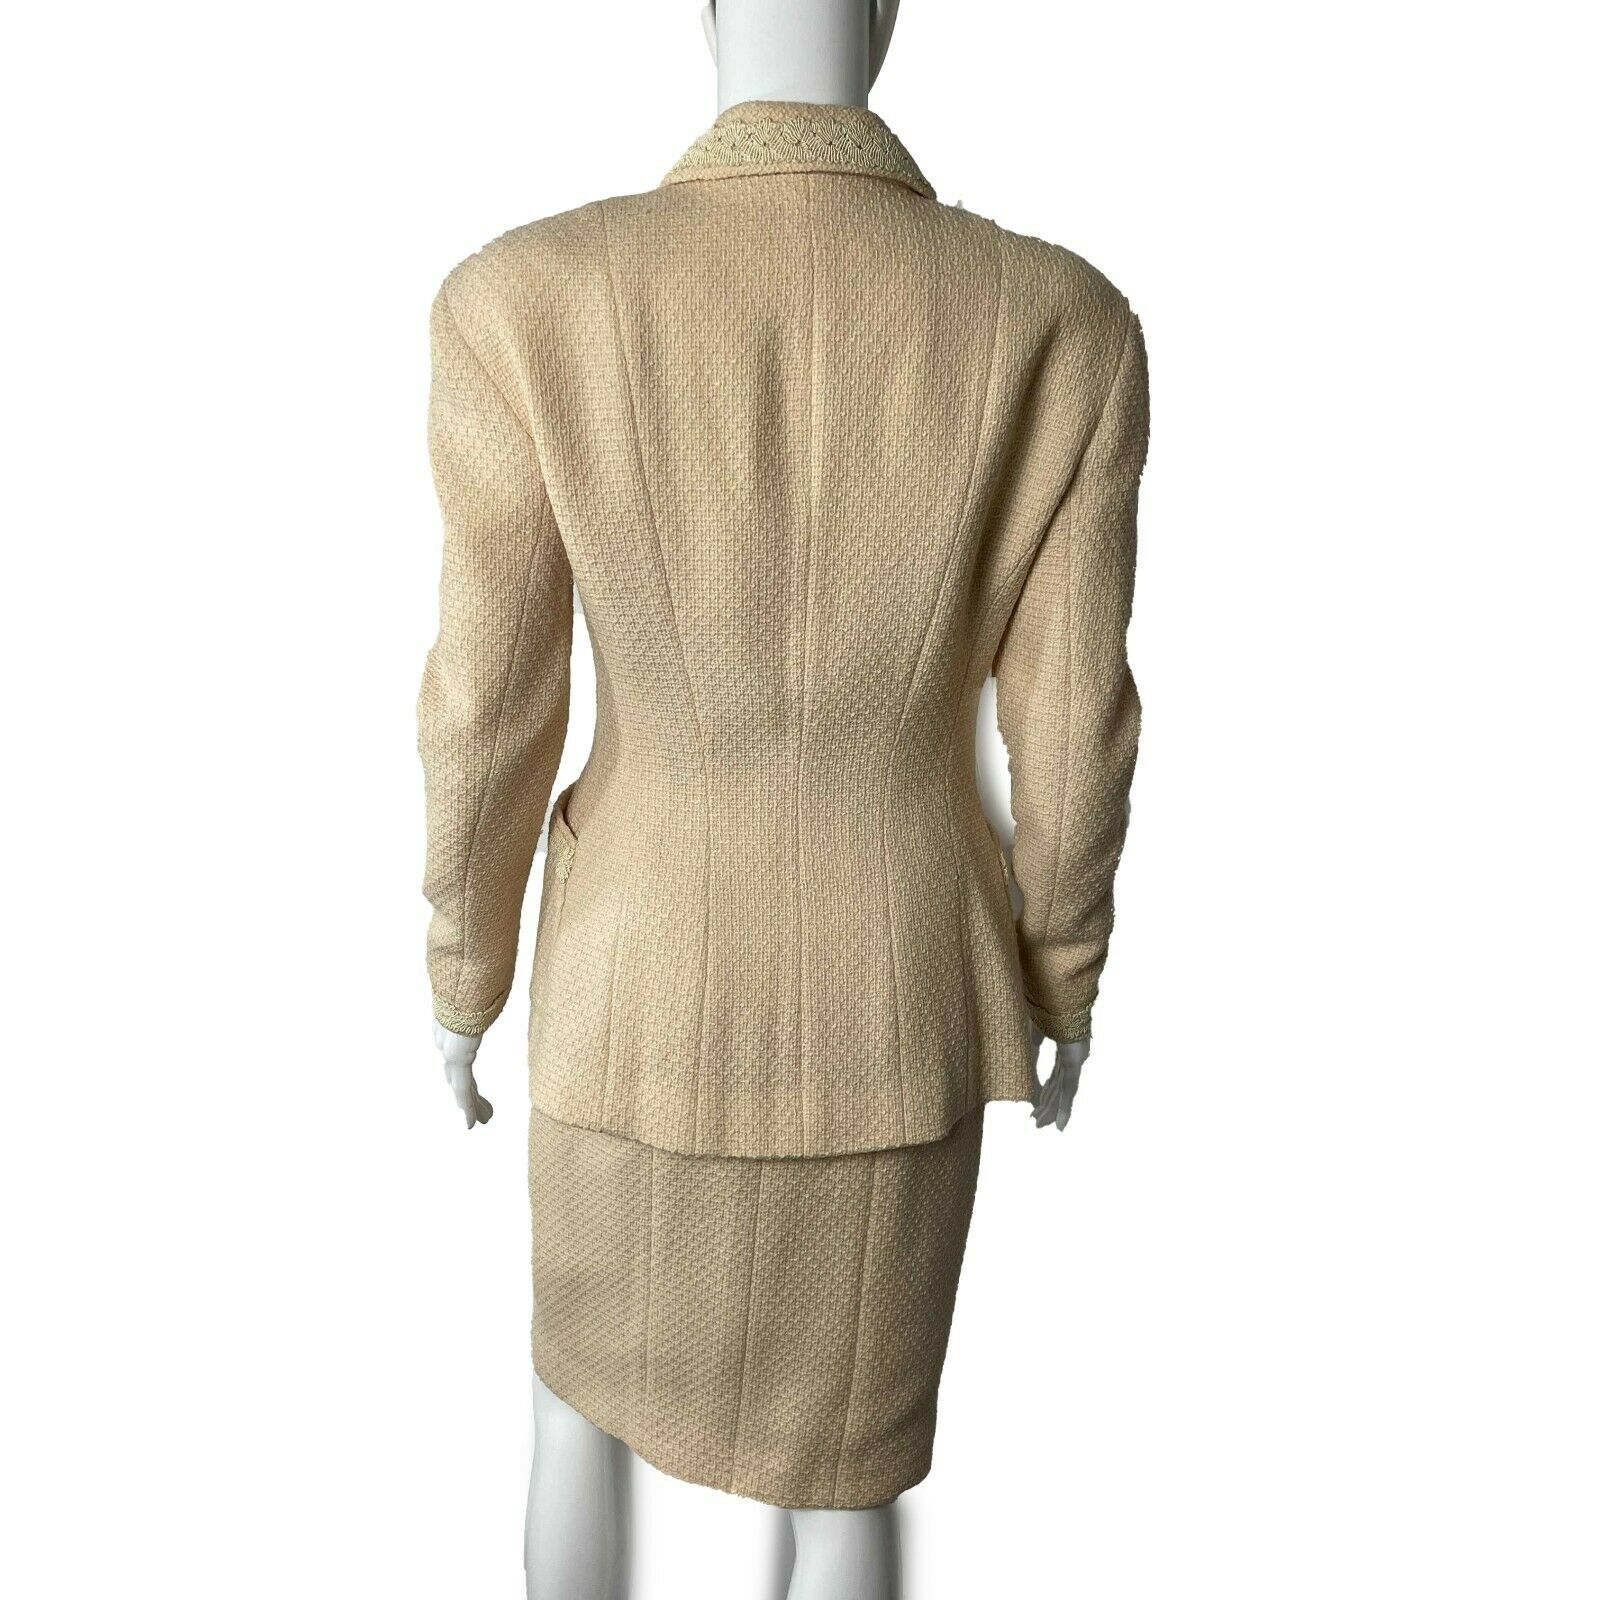 CHANEL- Lace Trim Pink Tweed Jacket Skirt Suit Set CC Buttons - 38